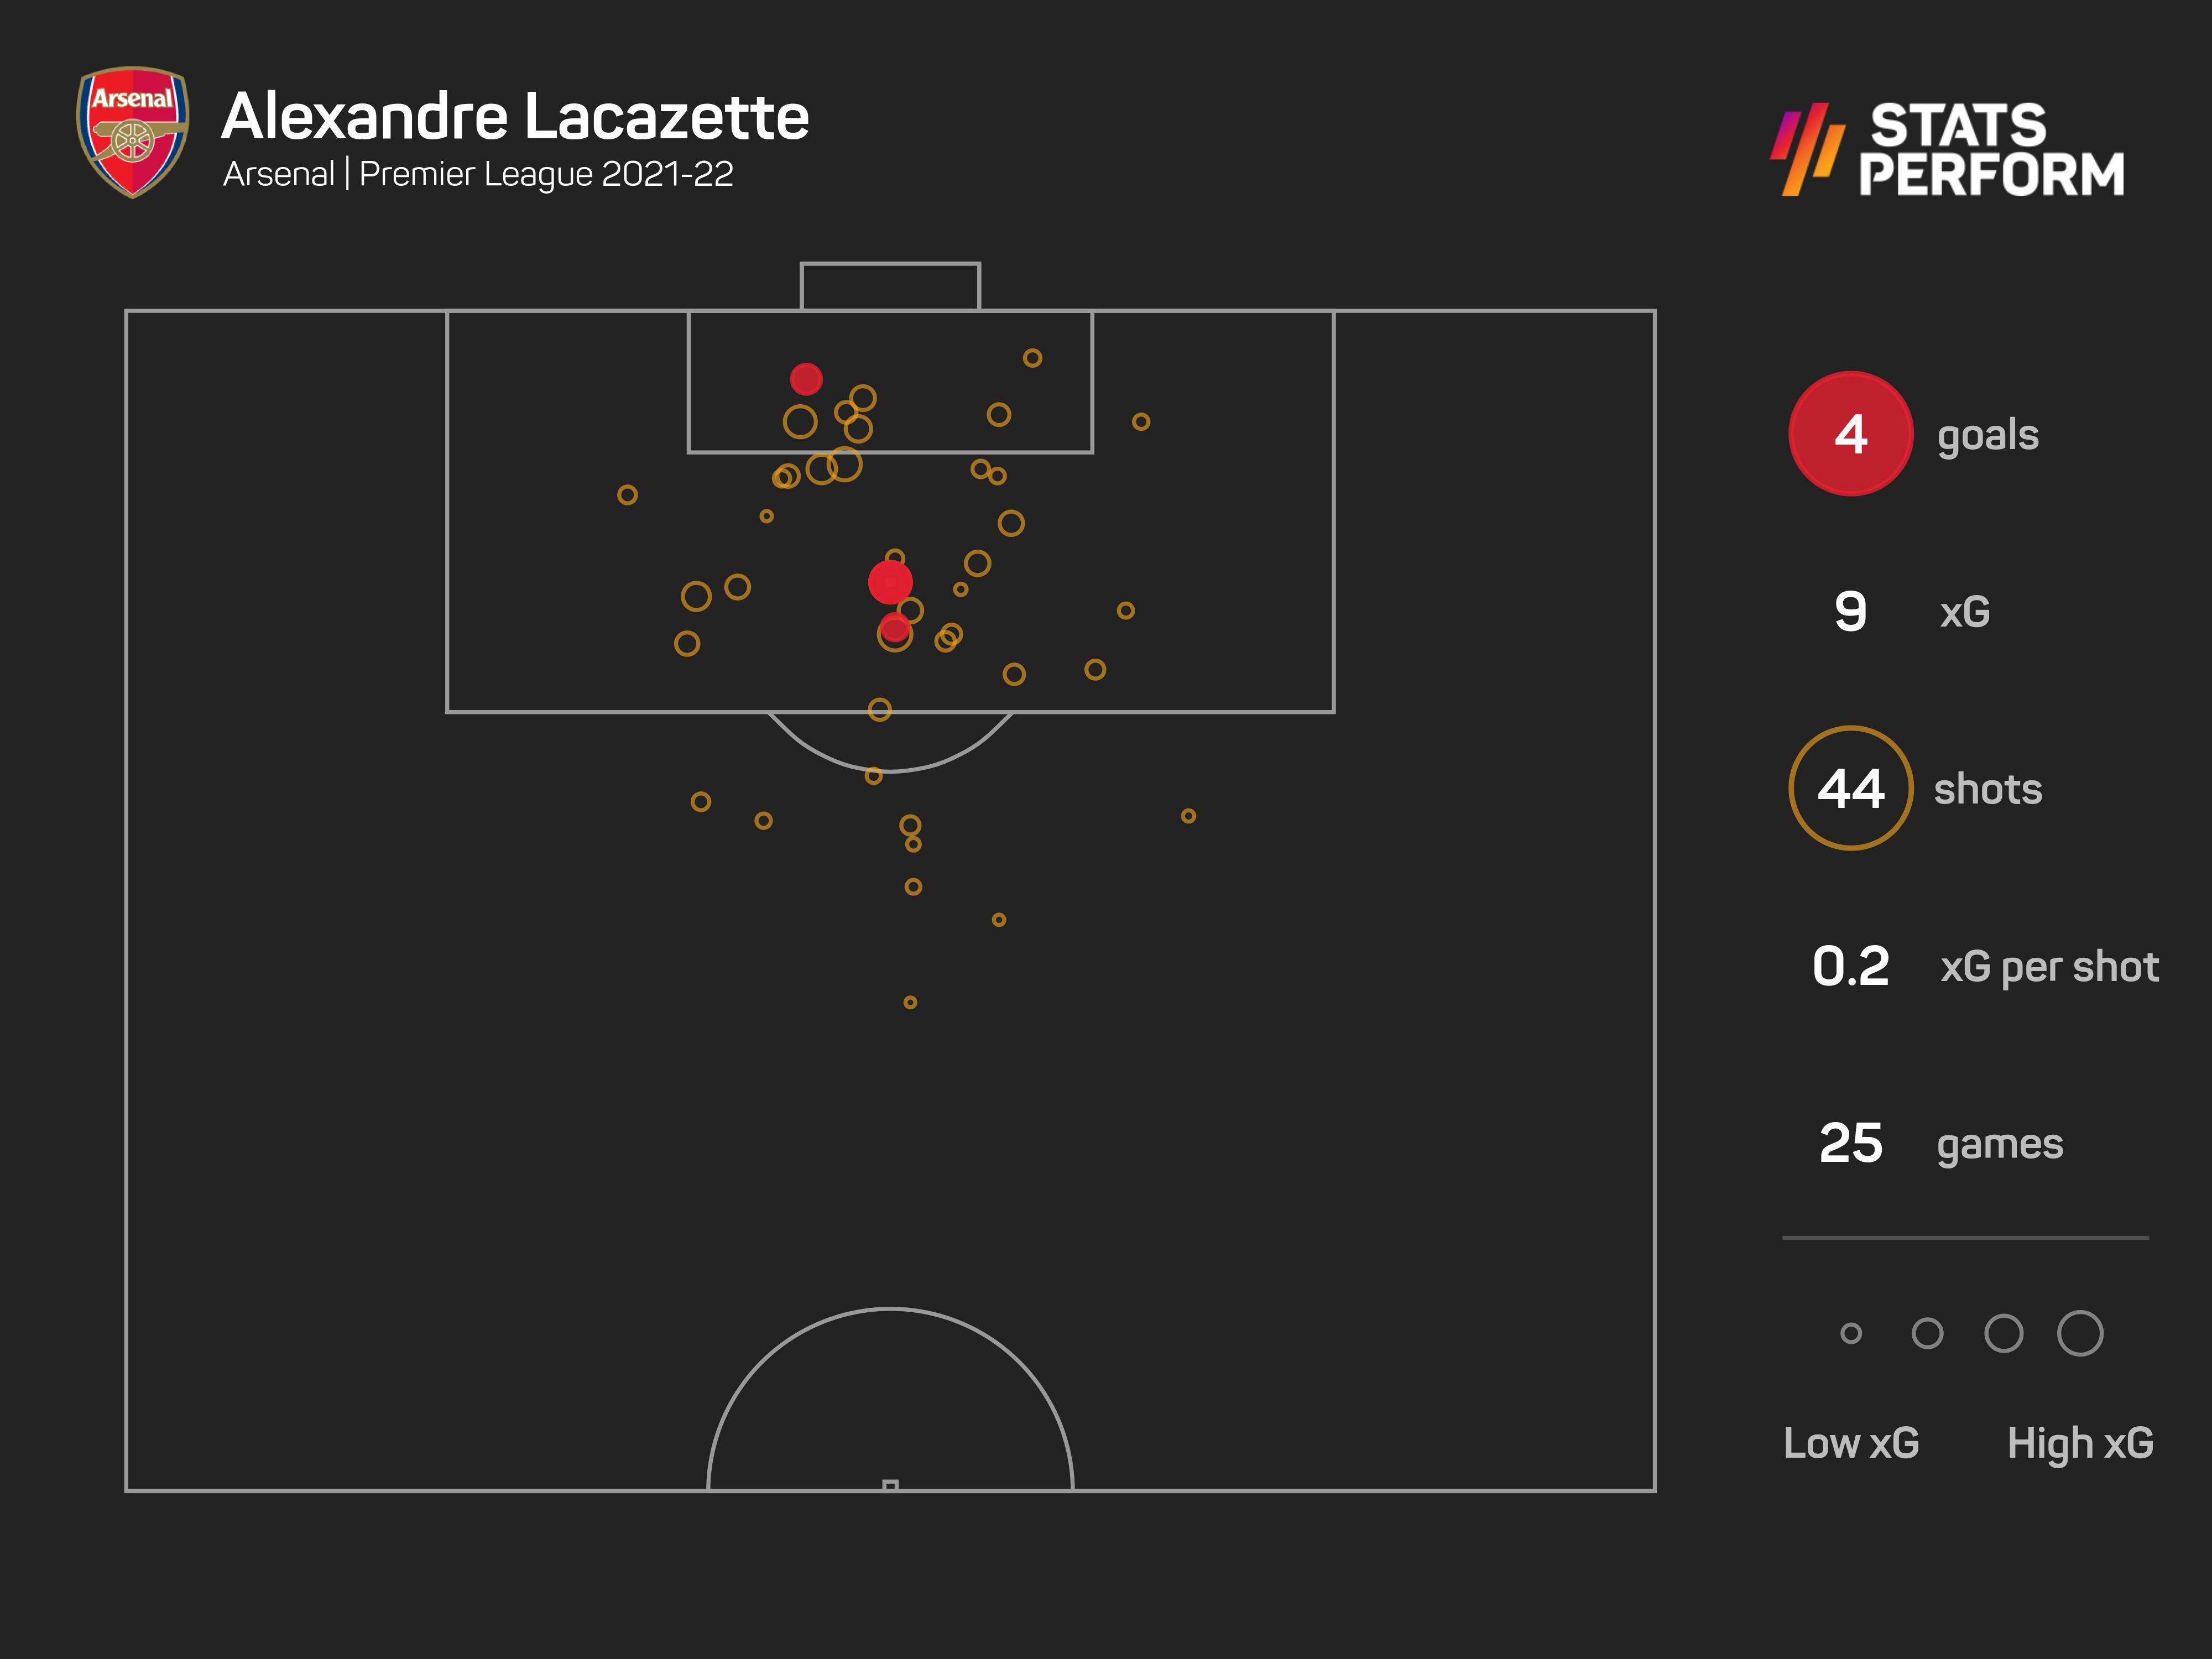 Alexandre Lacazette has underperformed his xG this season